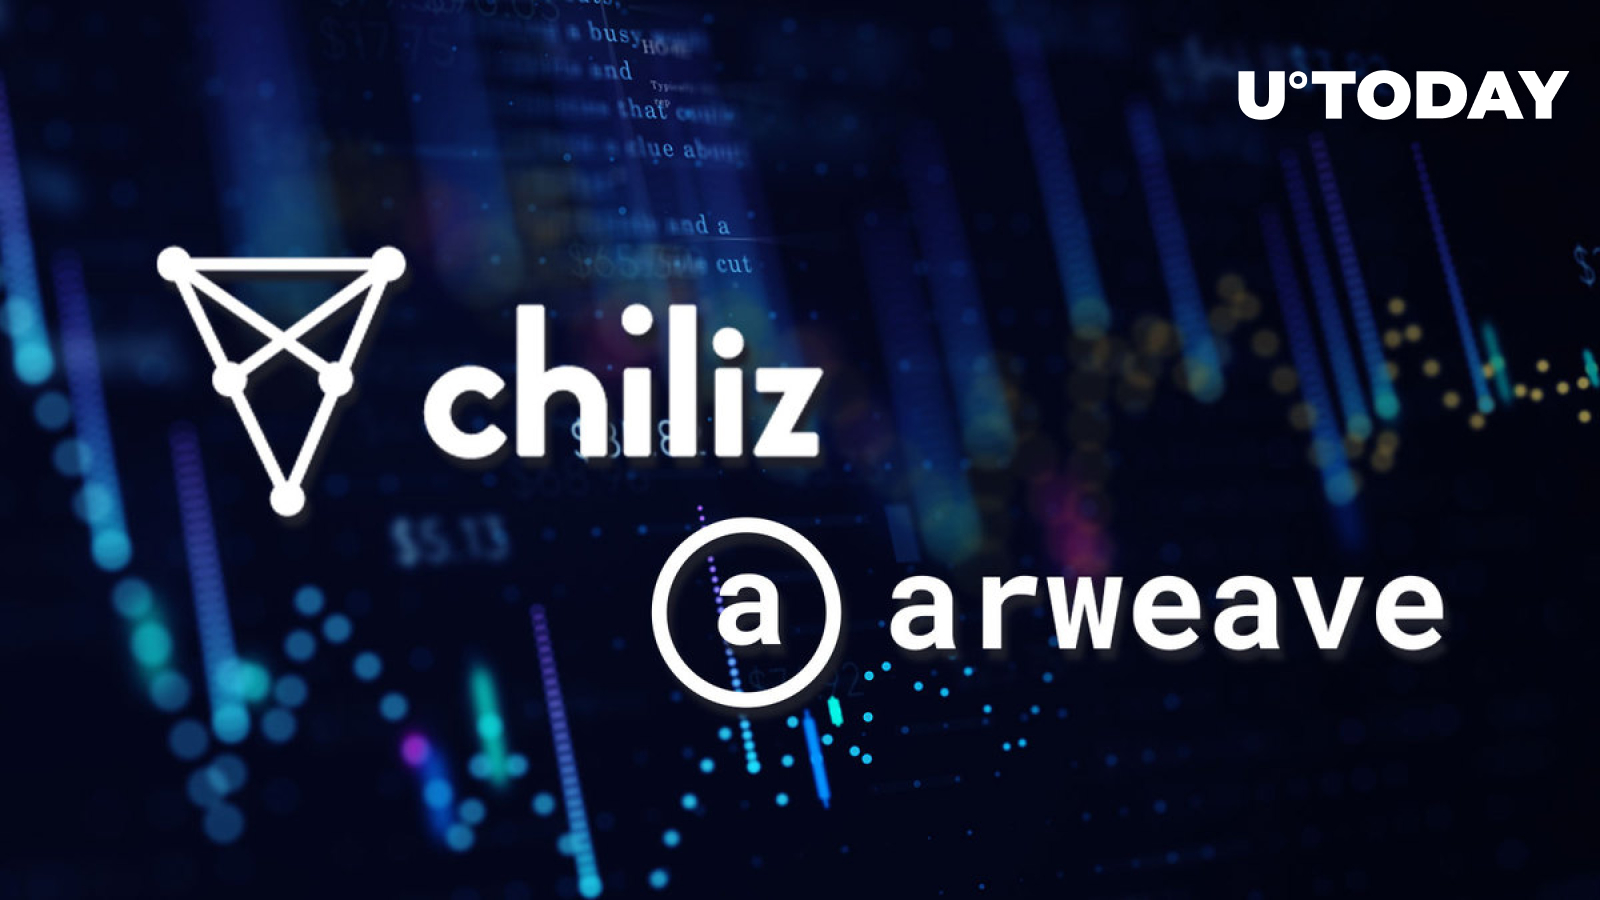 Arweave & Chiliz Partnerships Make Them Most Profitable Cryptos of Week